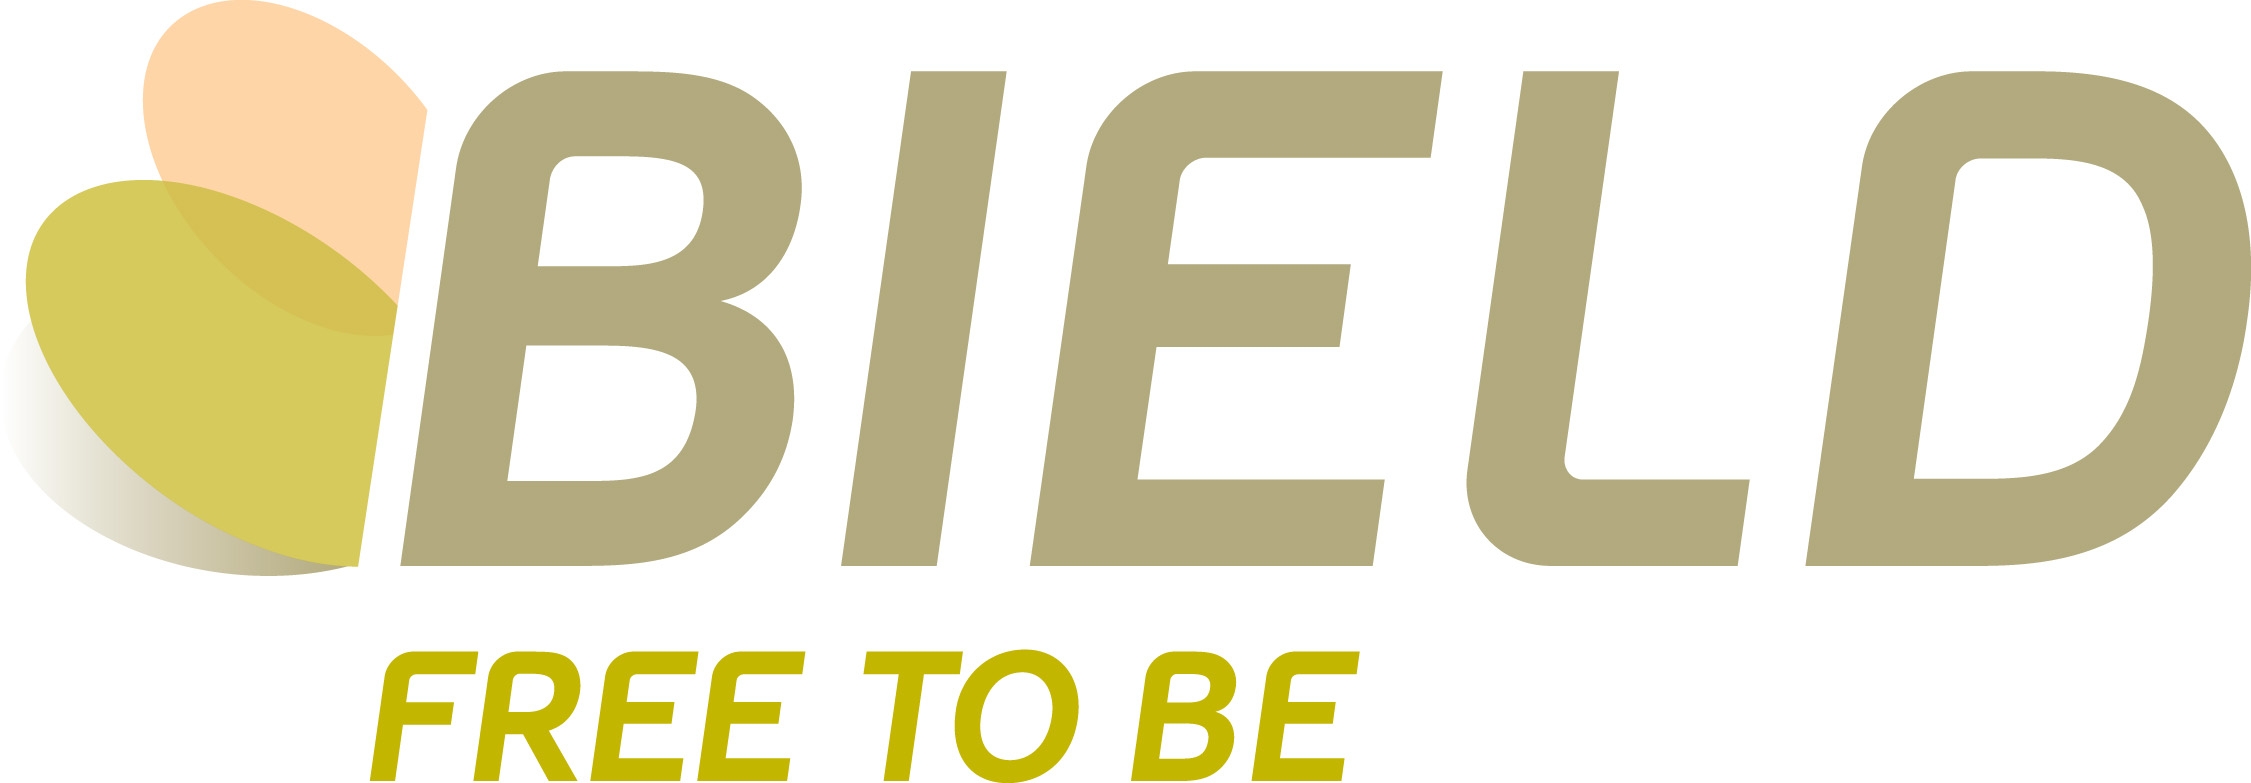 Bield-FTB-Logo-POS_3-Spot